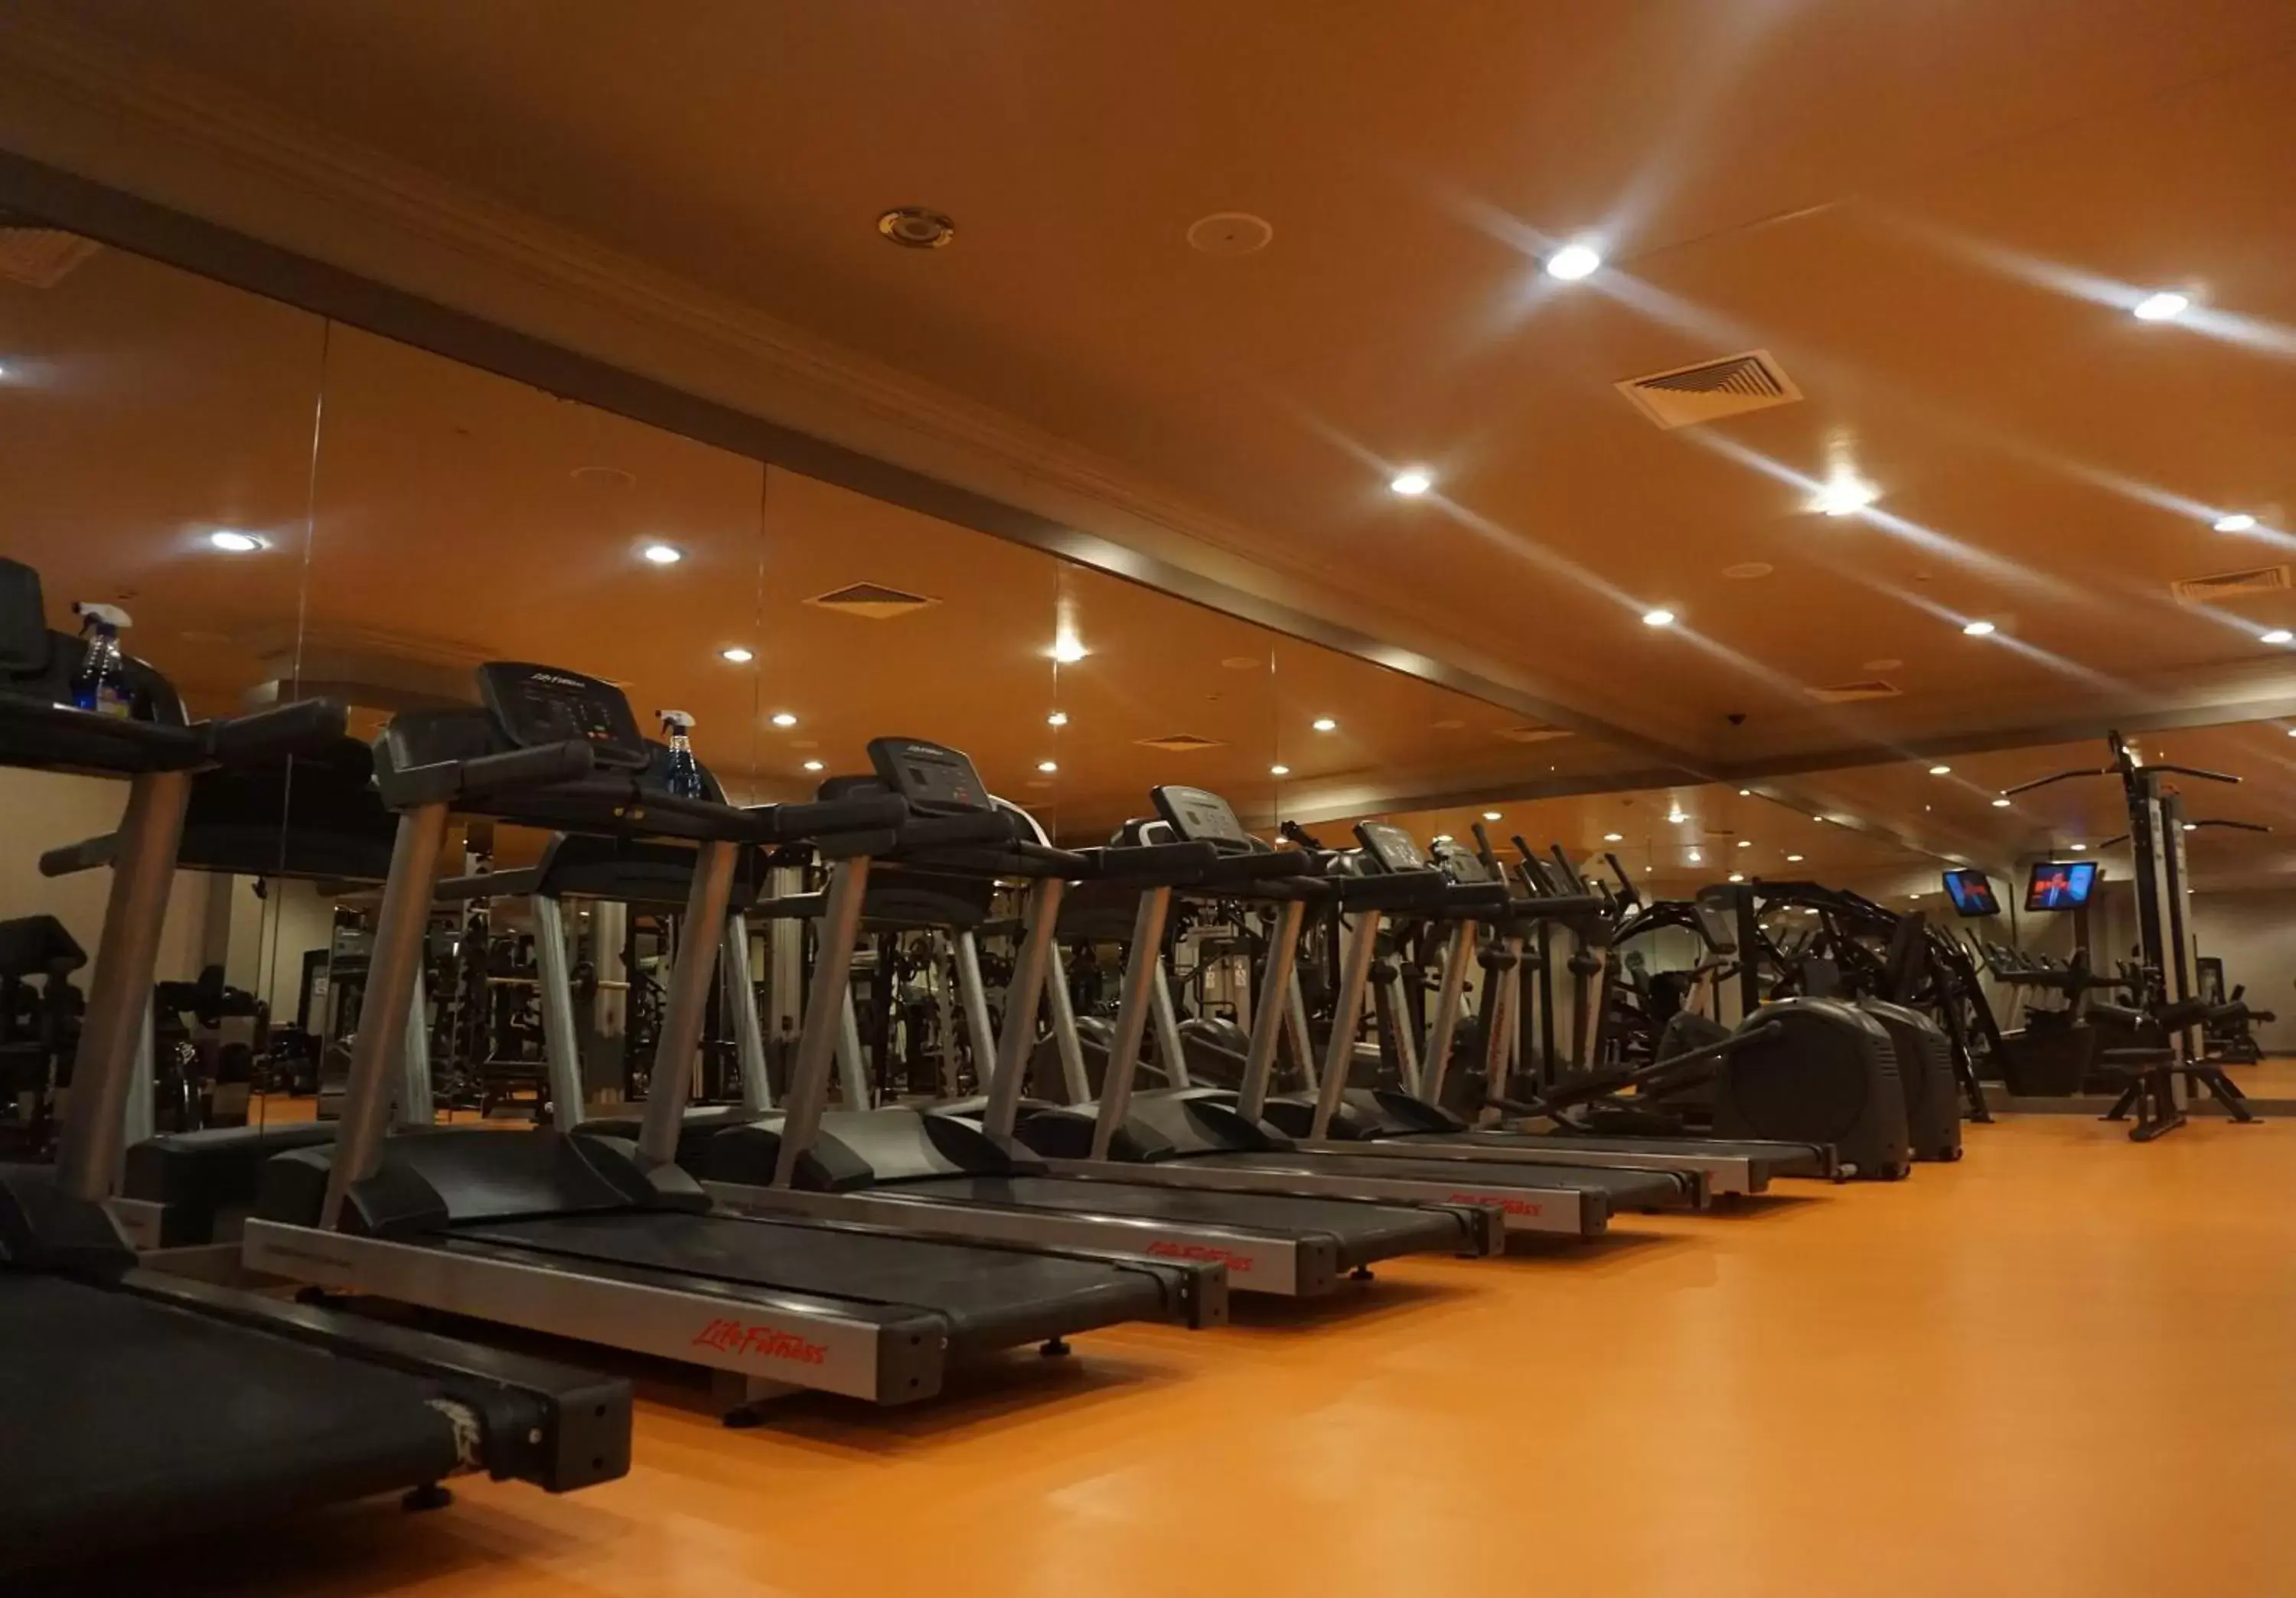 Fitness centre/facilities, Fitness Center/Facilities in Eresin Hotels Topkapi